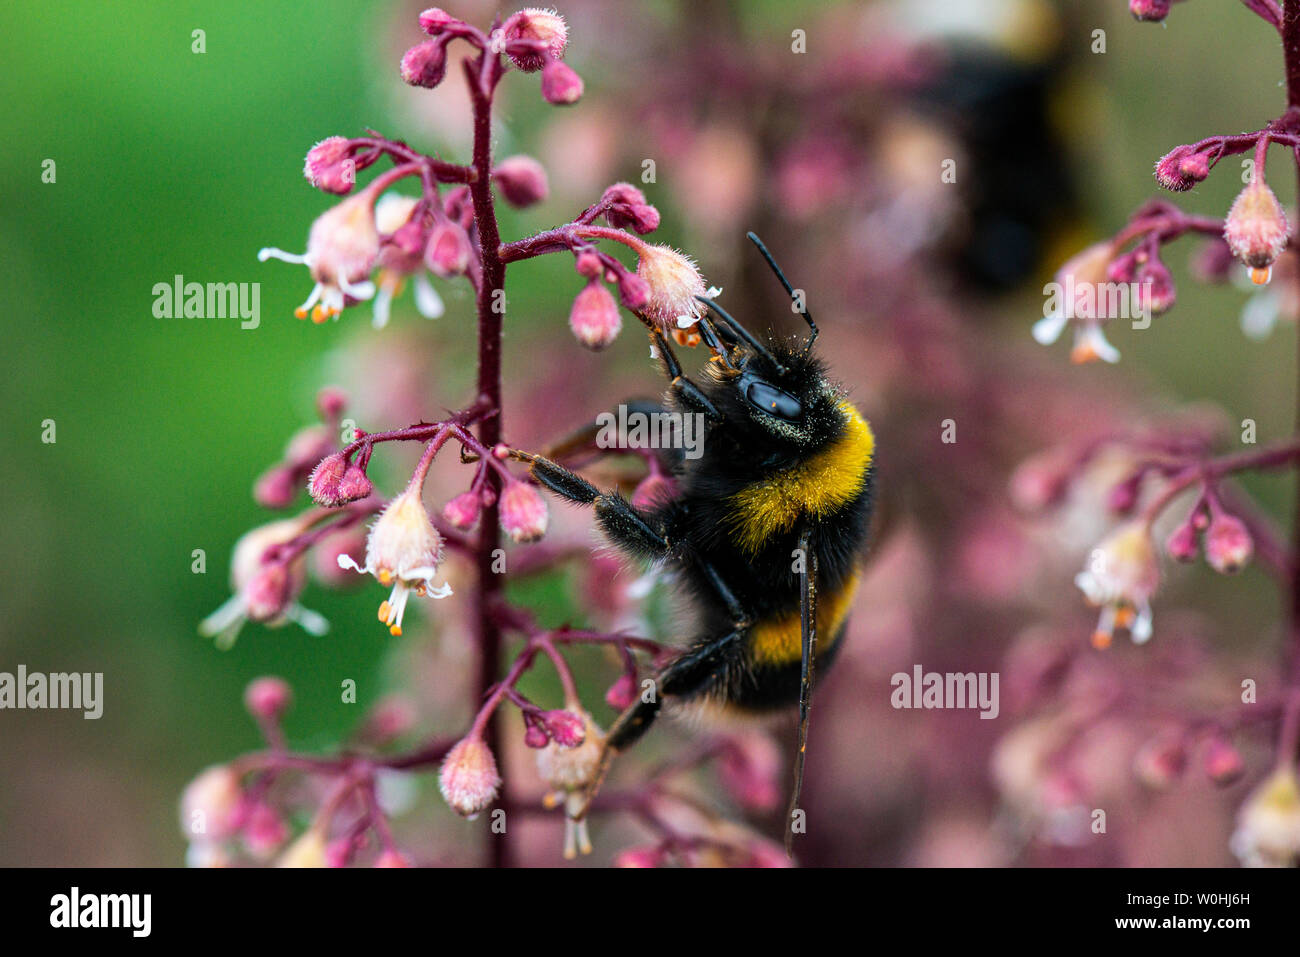 A bumble bee (bombus) on the flowers of an alum root 'Chocolate Ruffles' (Heuchera 'Chocolate Ruffles') Stock Photo